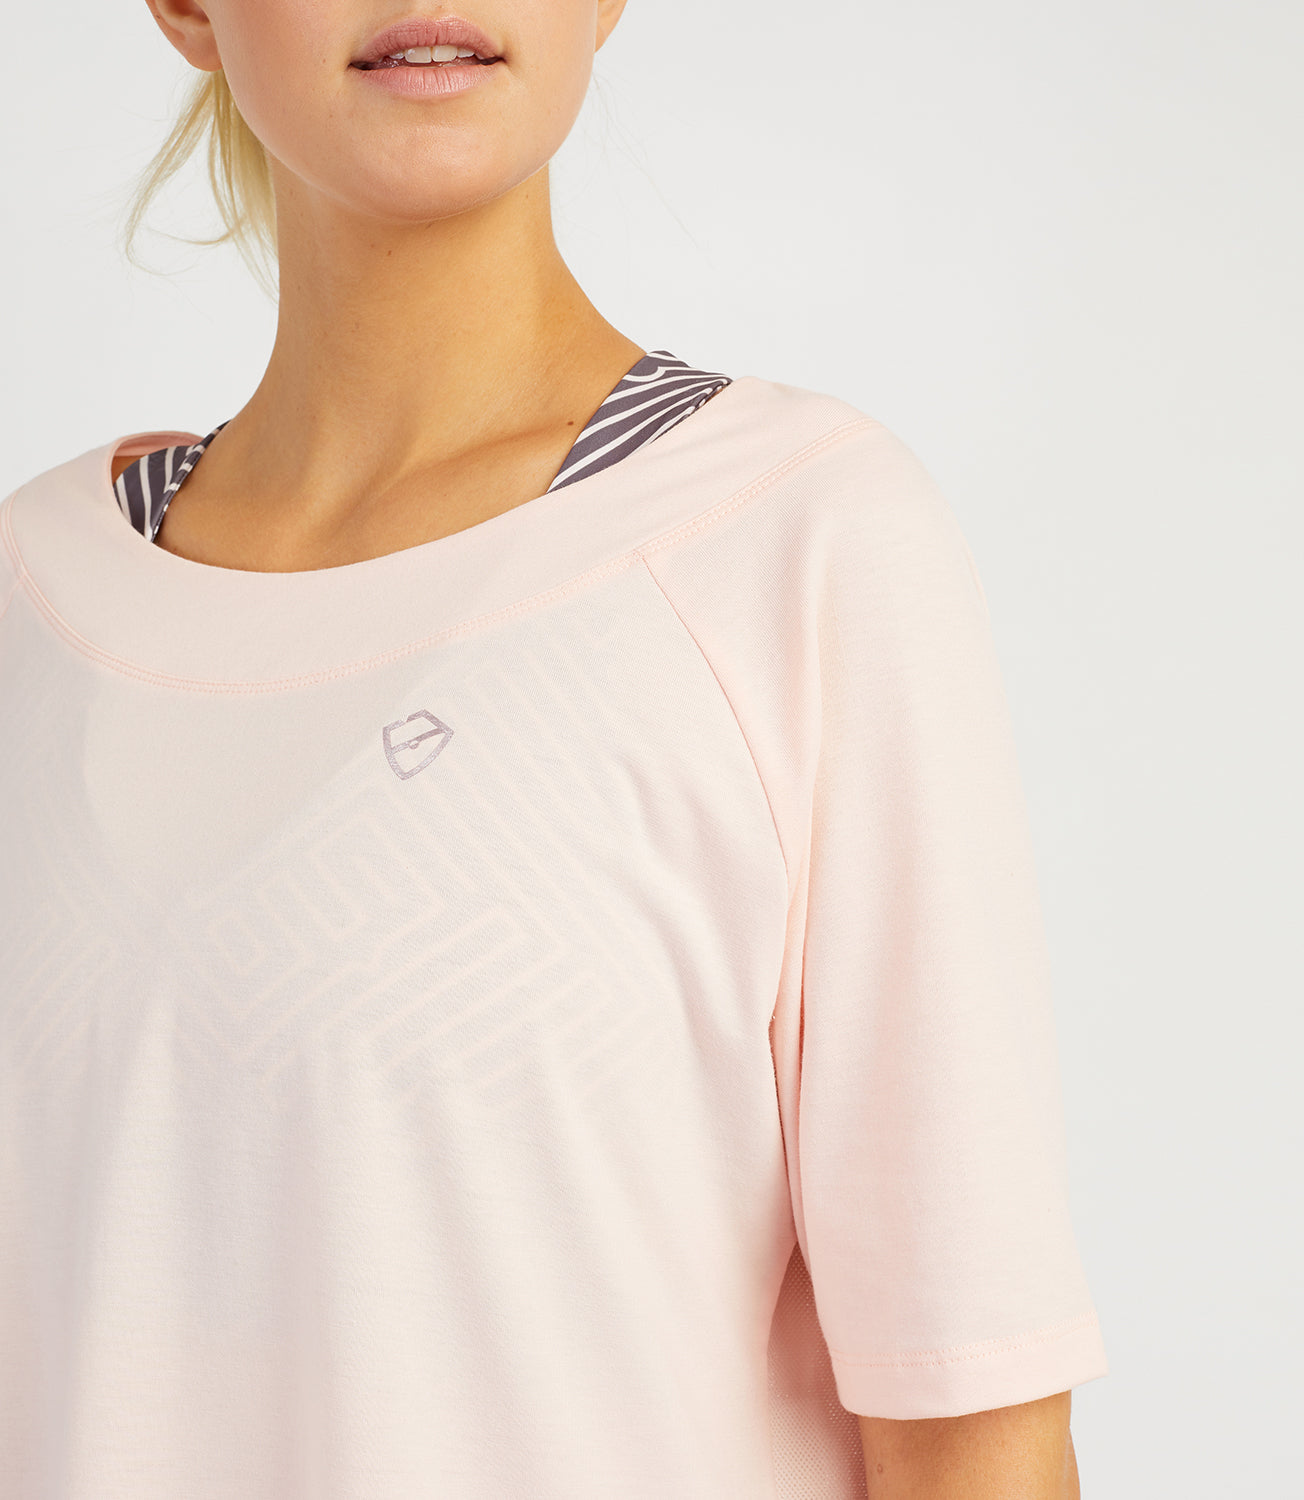 Tennis T-shirt Vests-Women's Tops-Bridget Loose Tee-Rose-PlayBrave Sports UK